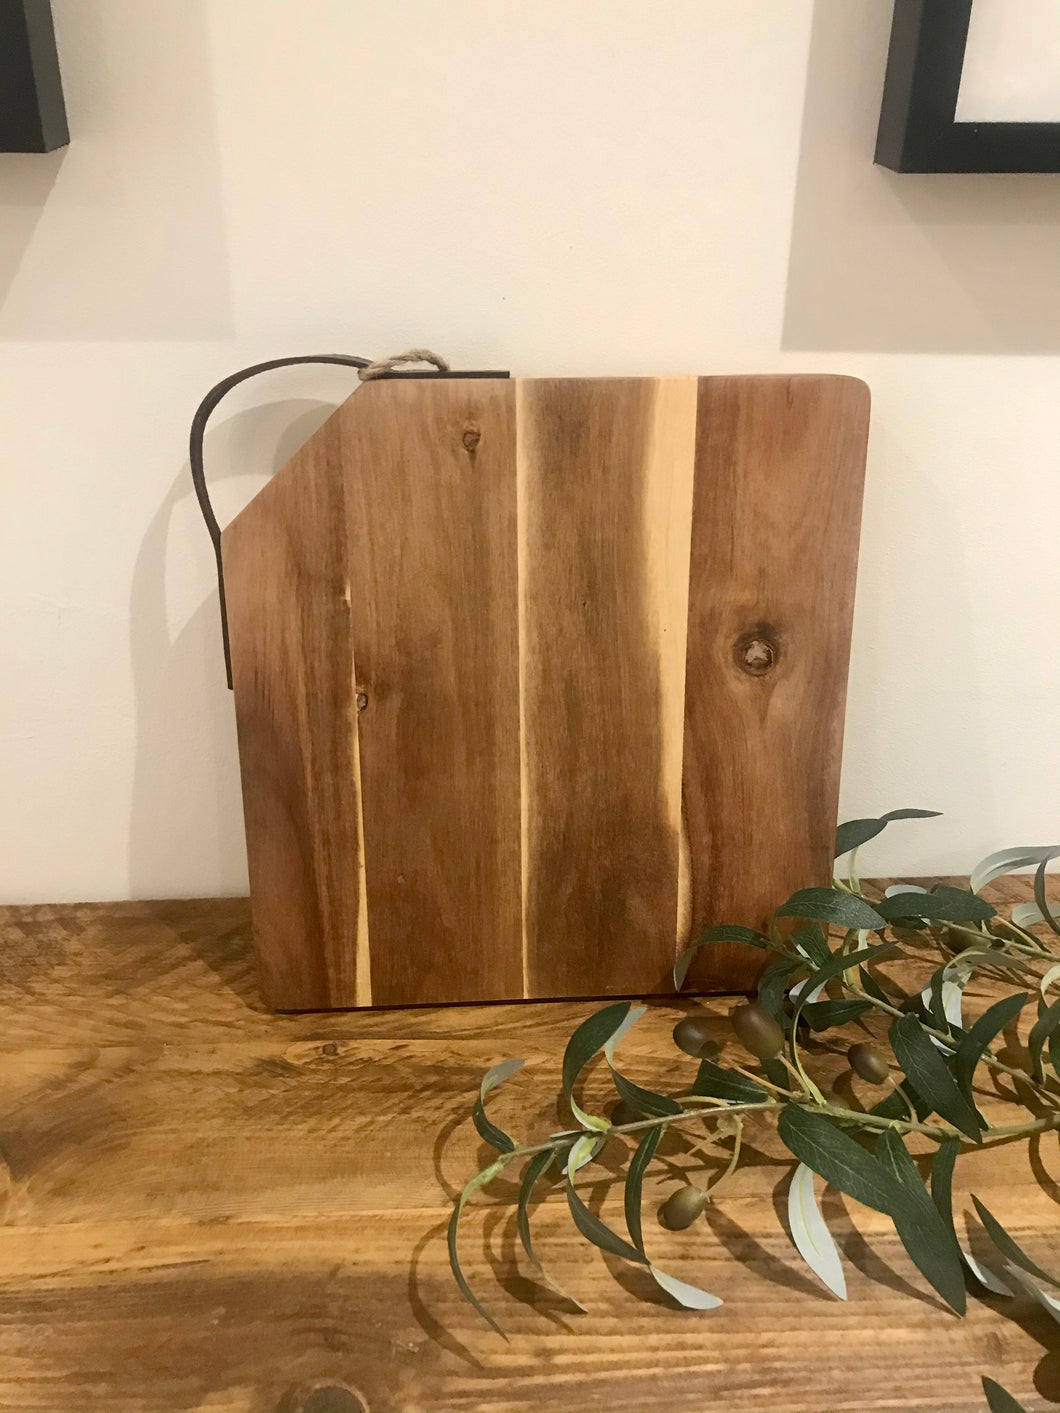 Square wooden board | natural acacia | cheese board | serving plank | serving board | antipasti board